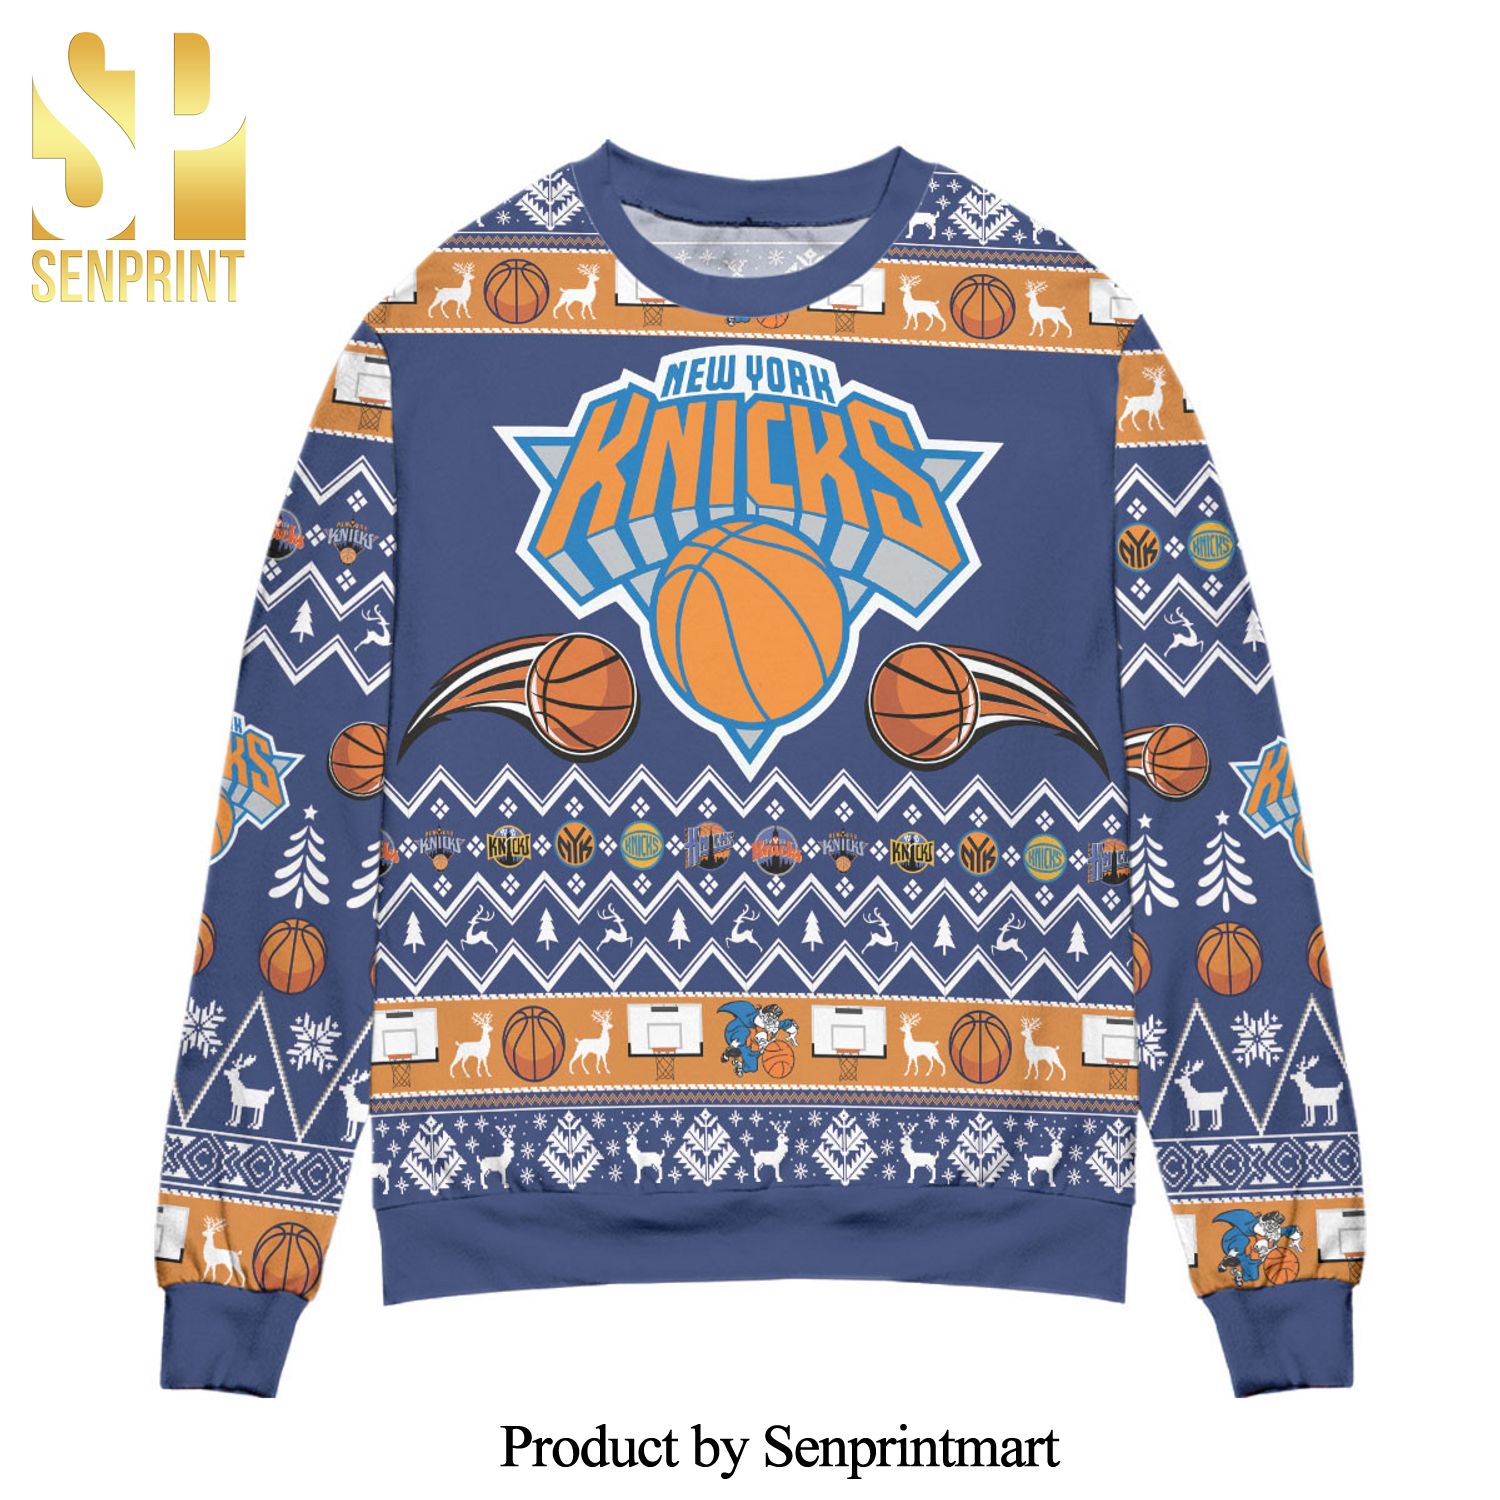 New York Knicks Basketball Team Reindeer Pattern Knitted Ugly Christmas Sweater – Blue